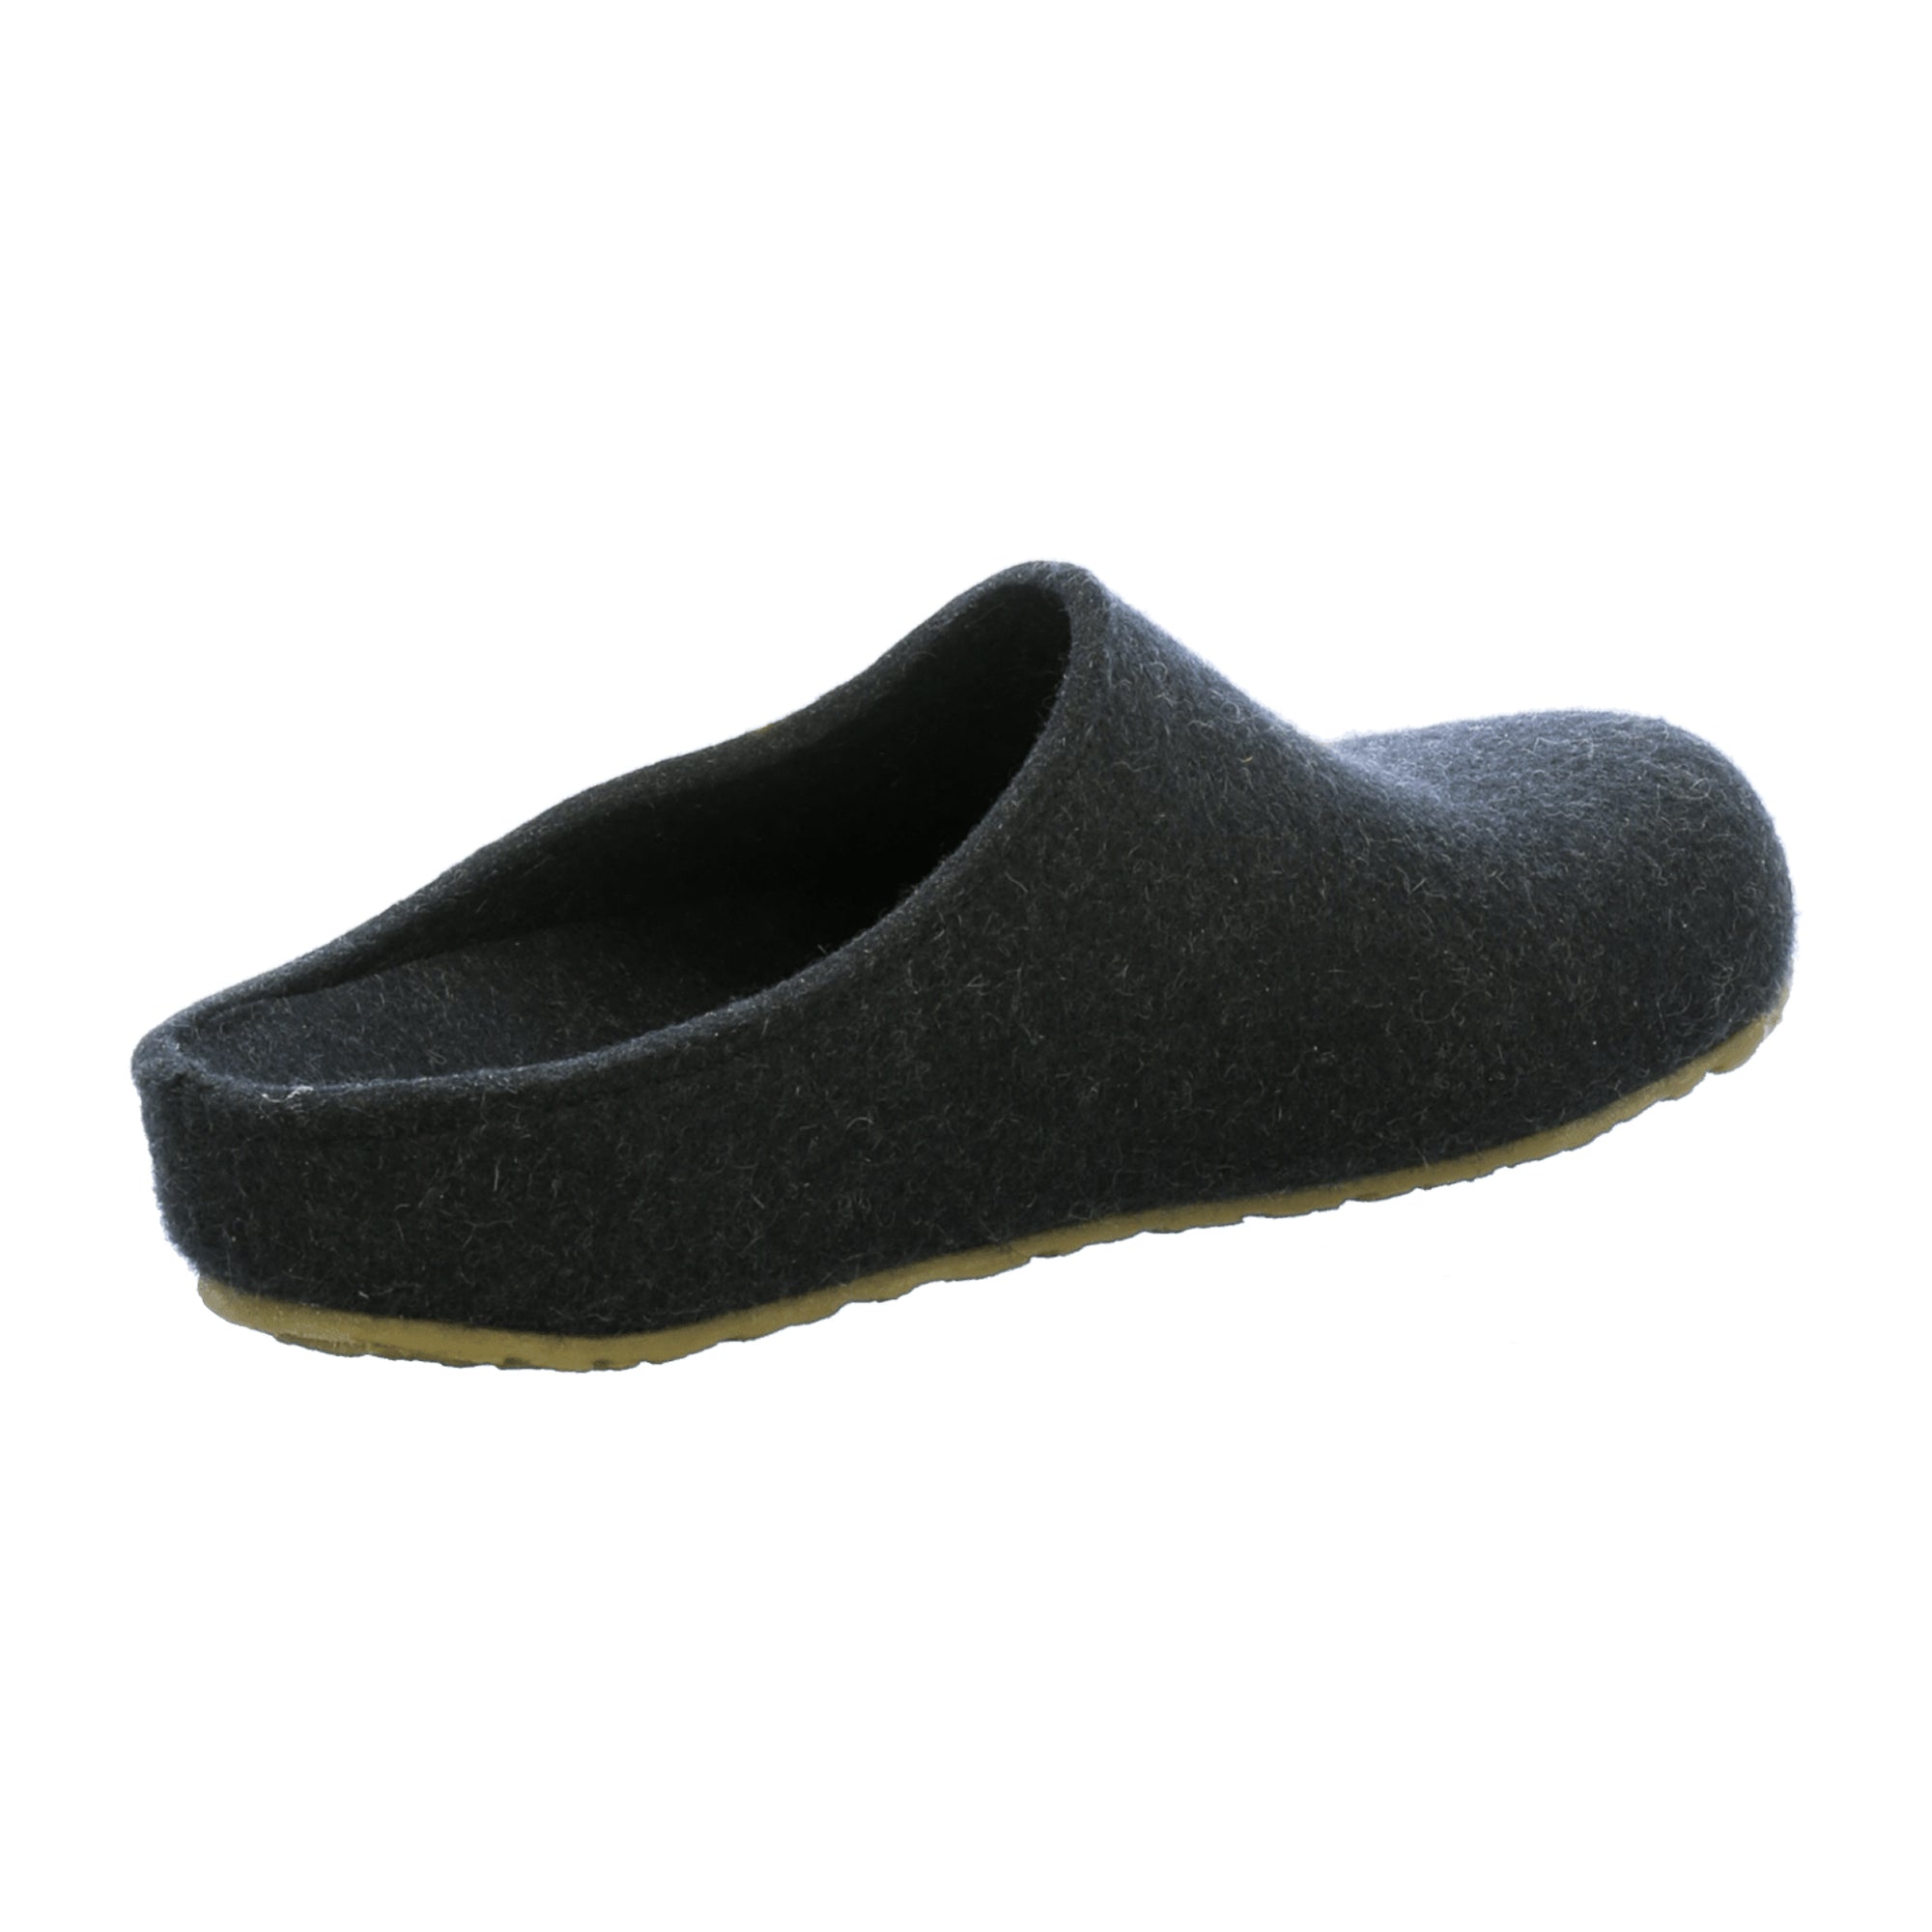 Haflinger Men's Slippers - Stylish & Durable Gray Wool Comfort